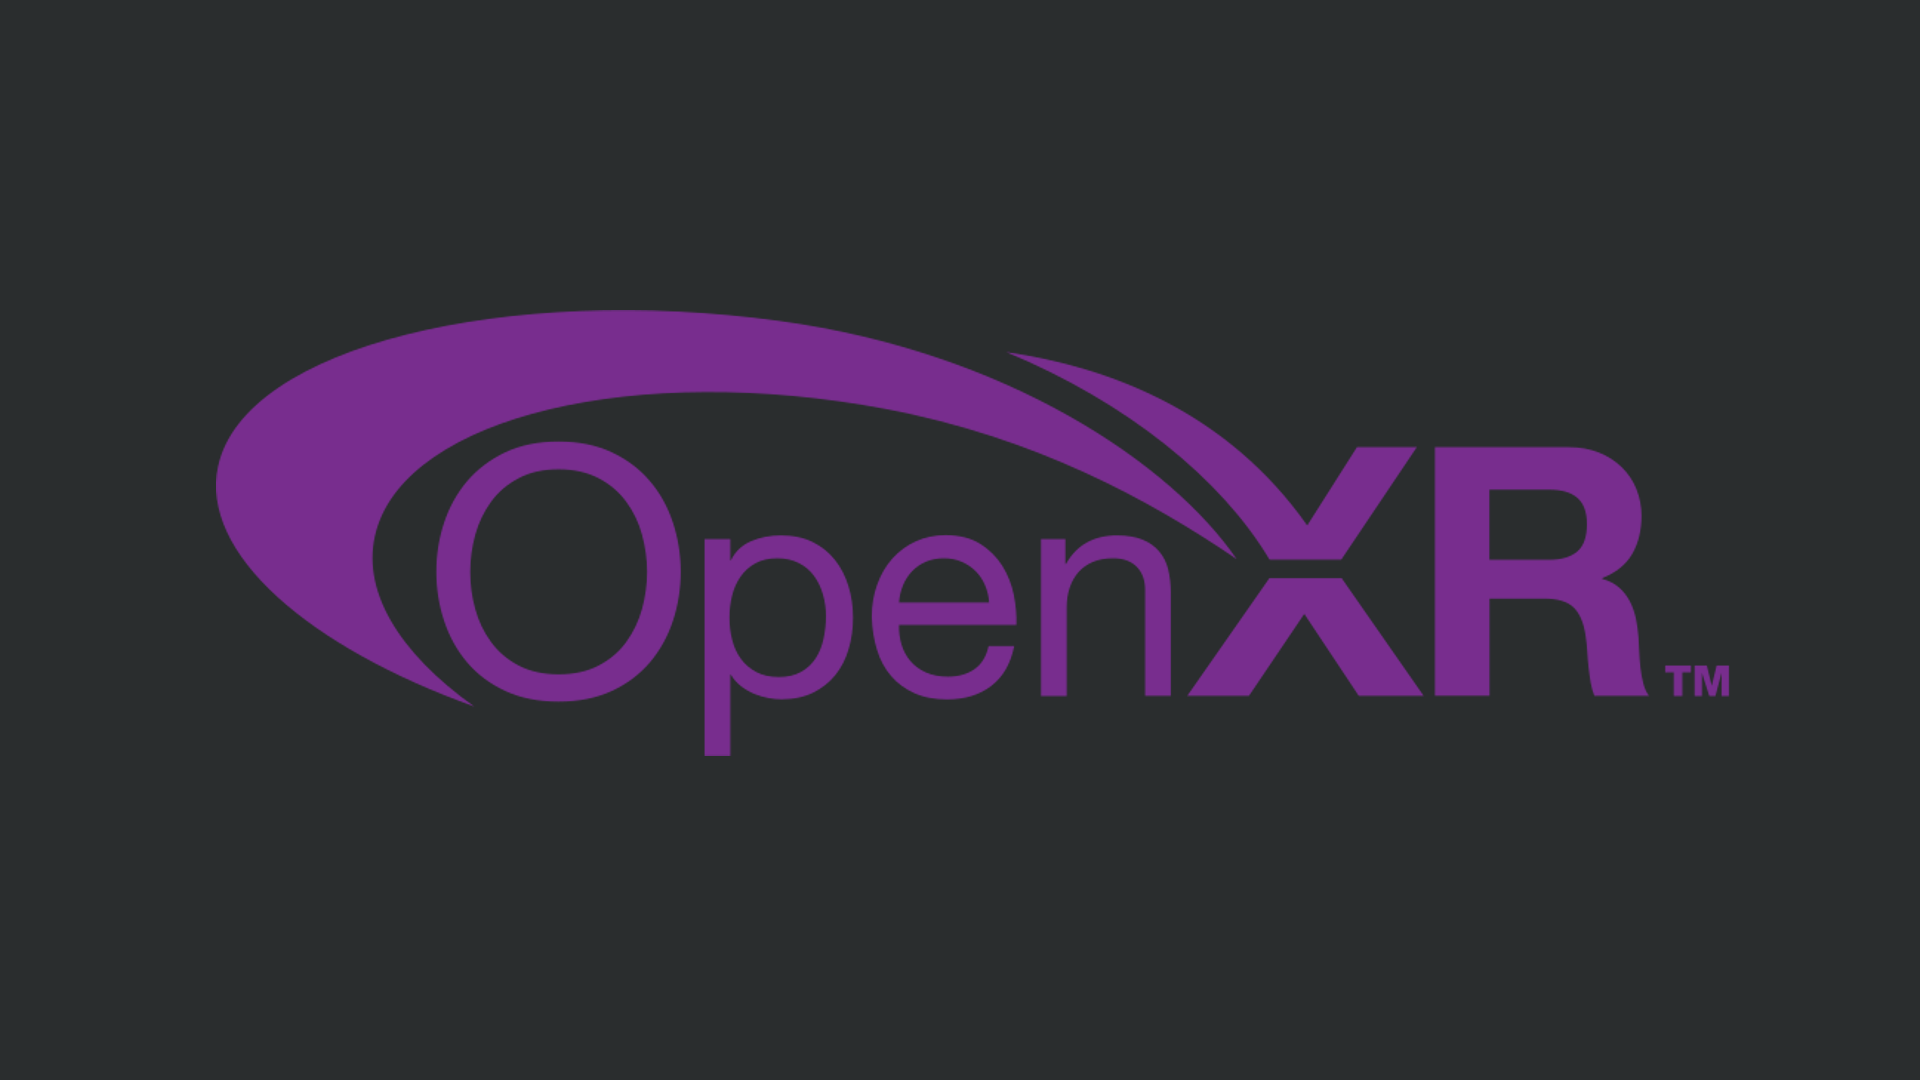 OpenXR